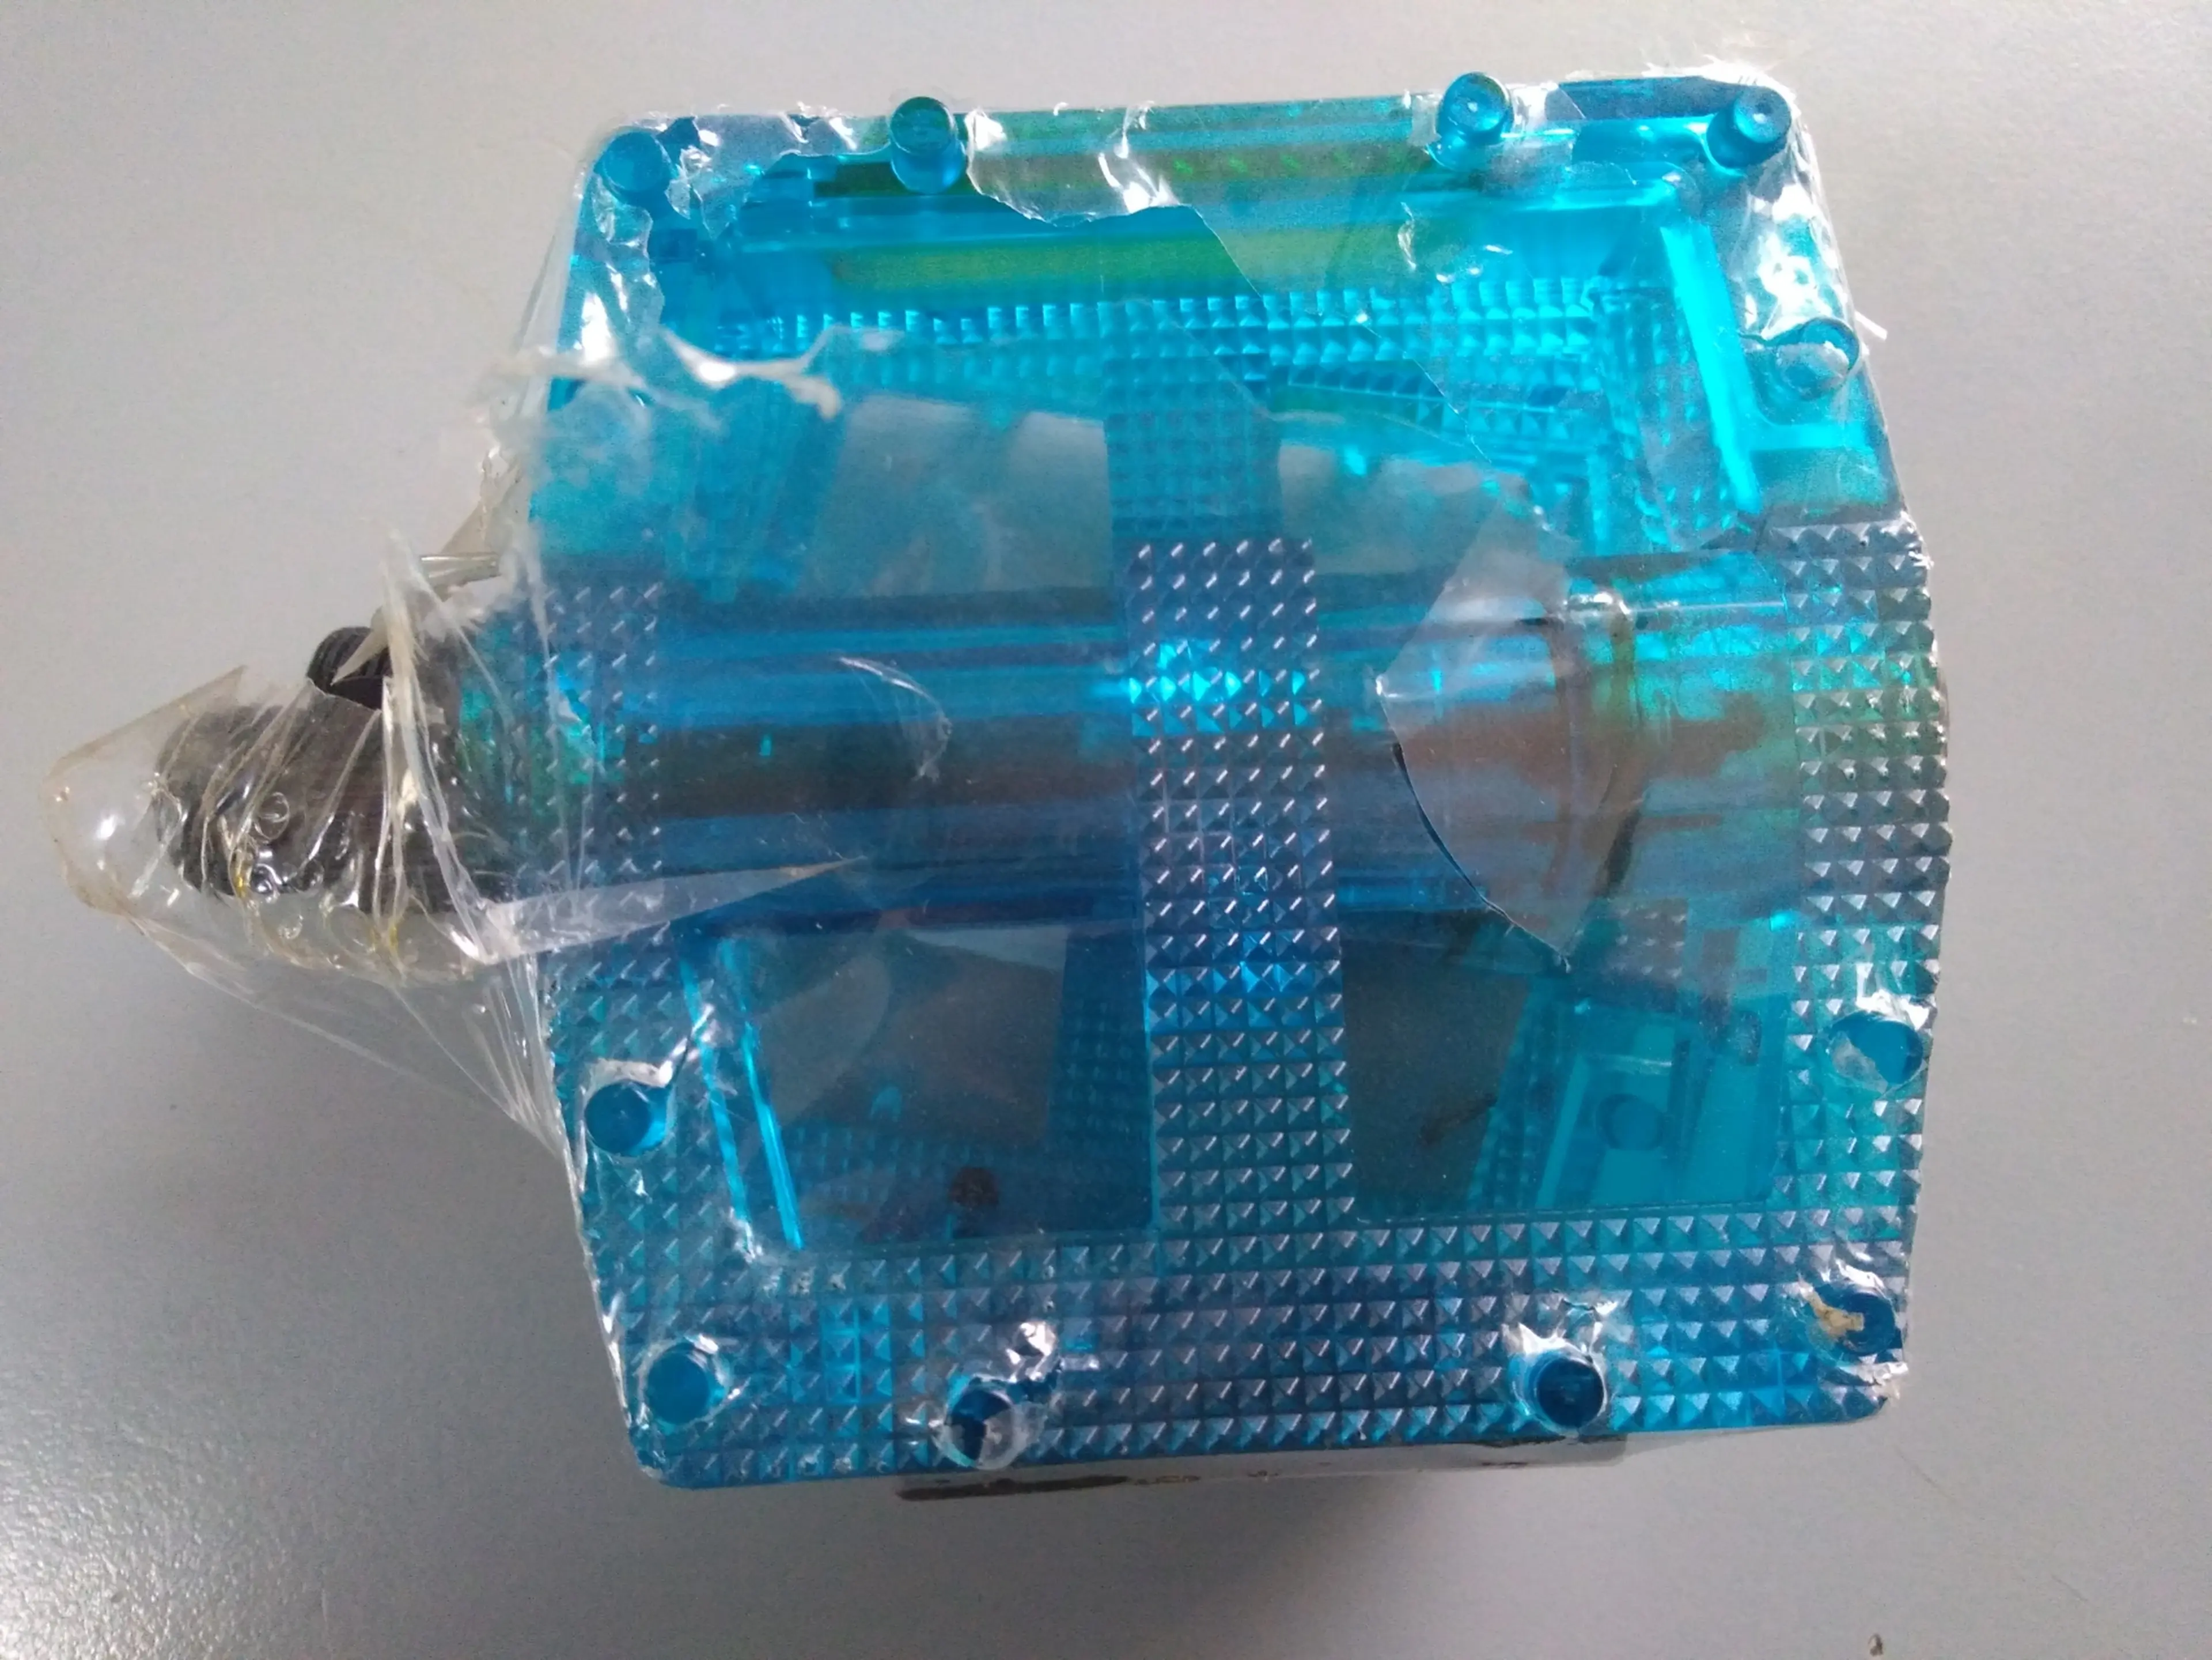 1. Pedale plastic transparent noi